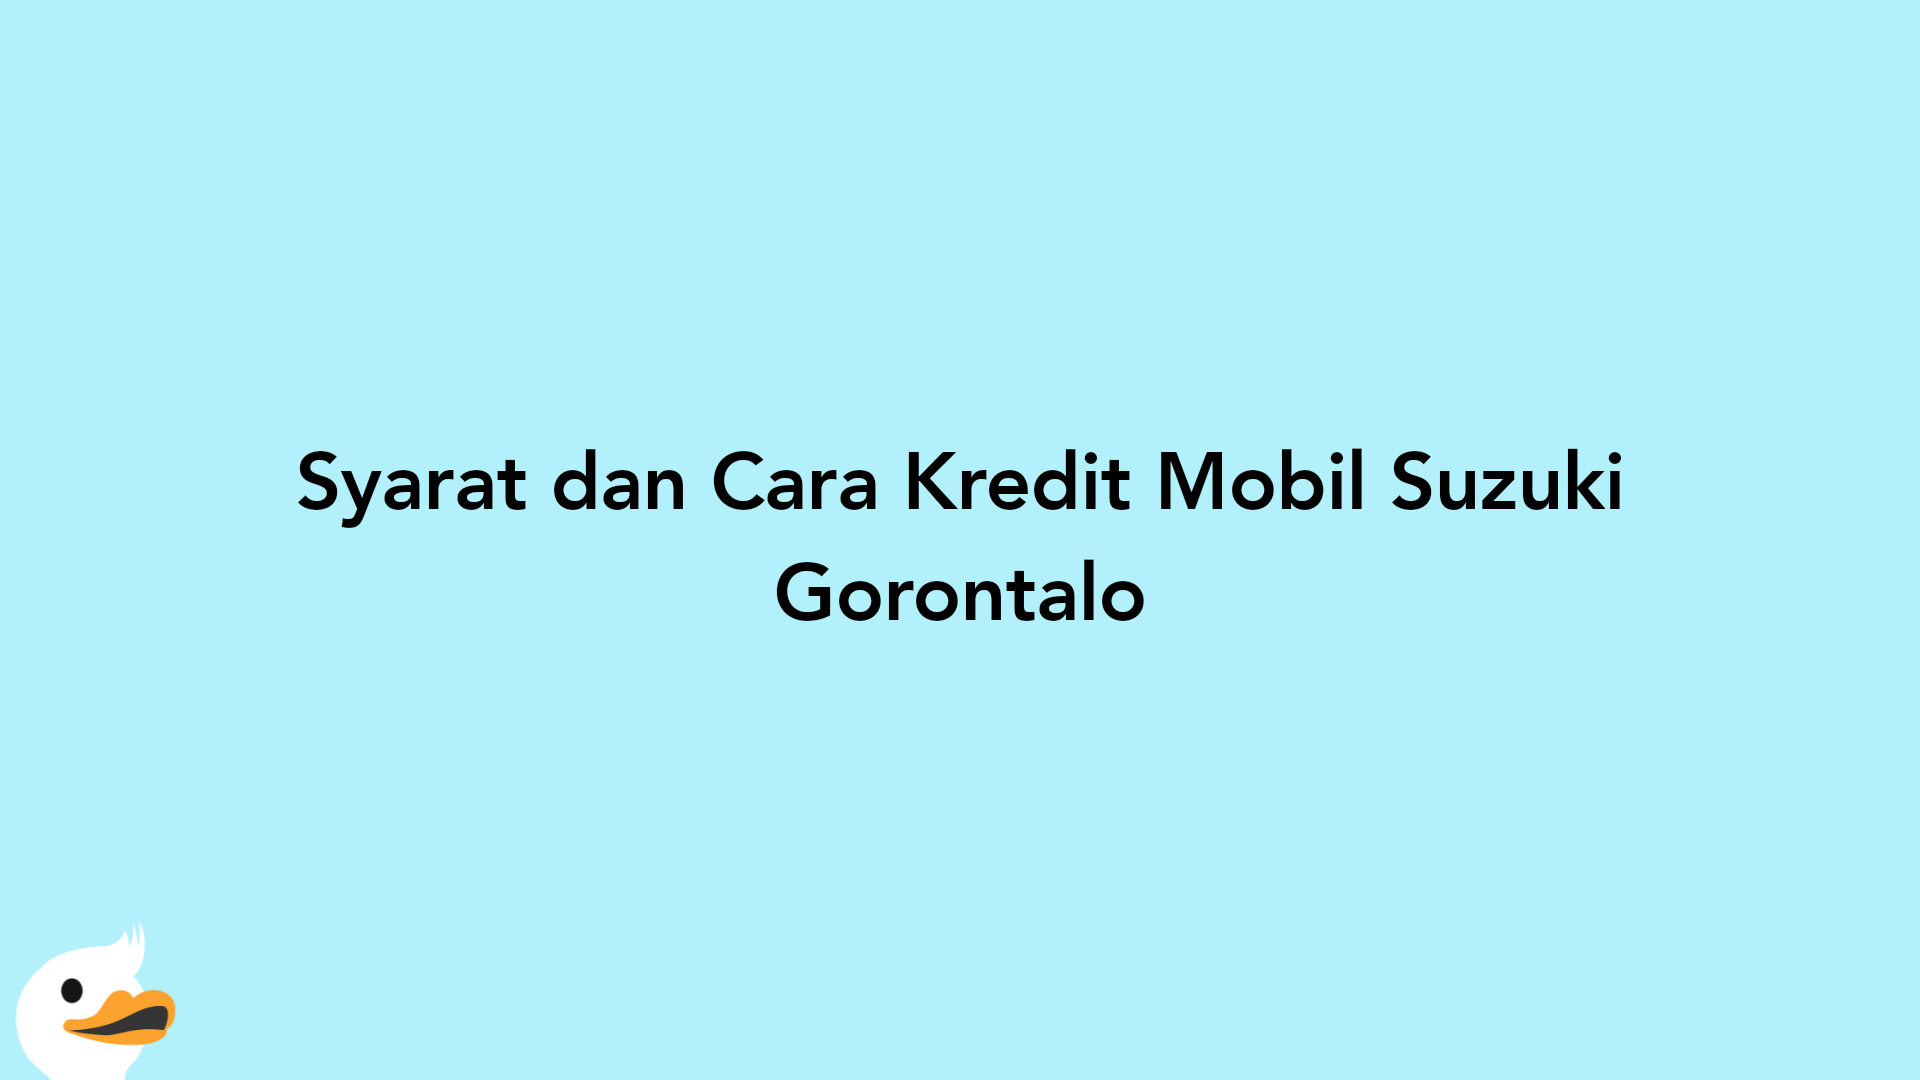 Syarat dan Cara Kredit Mobil Suzuki Gorontalo